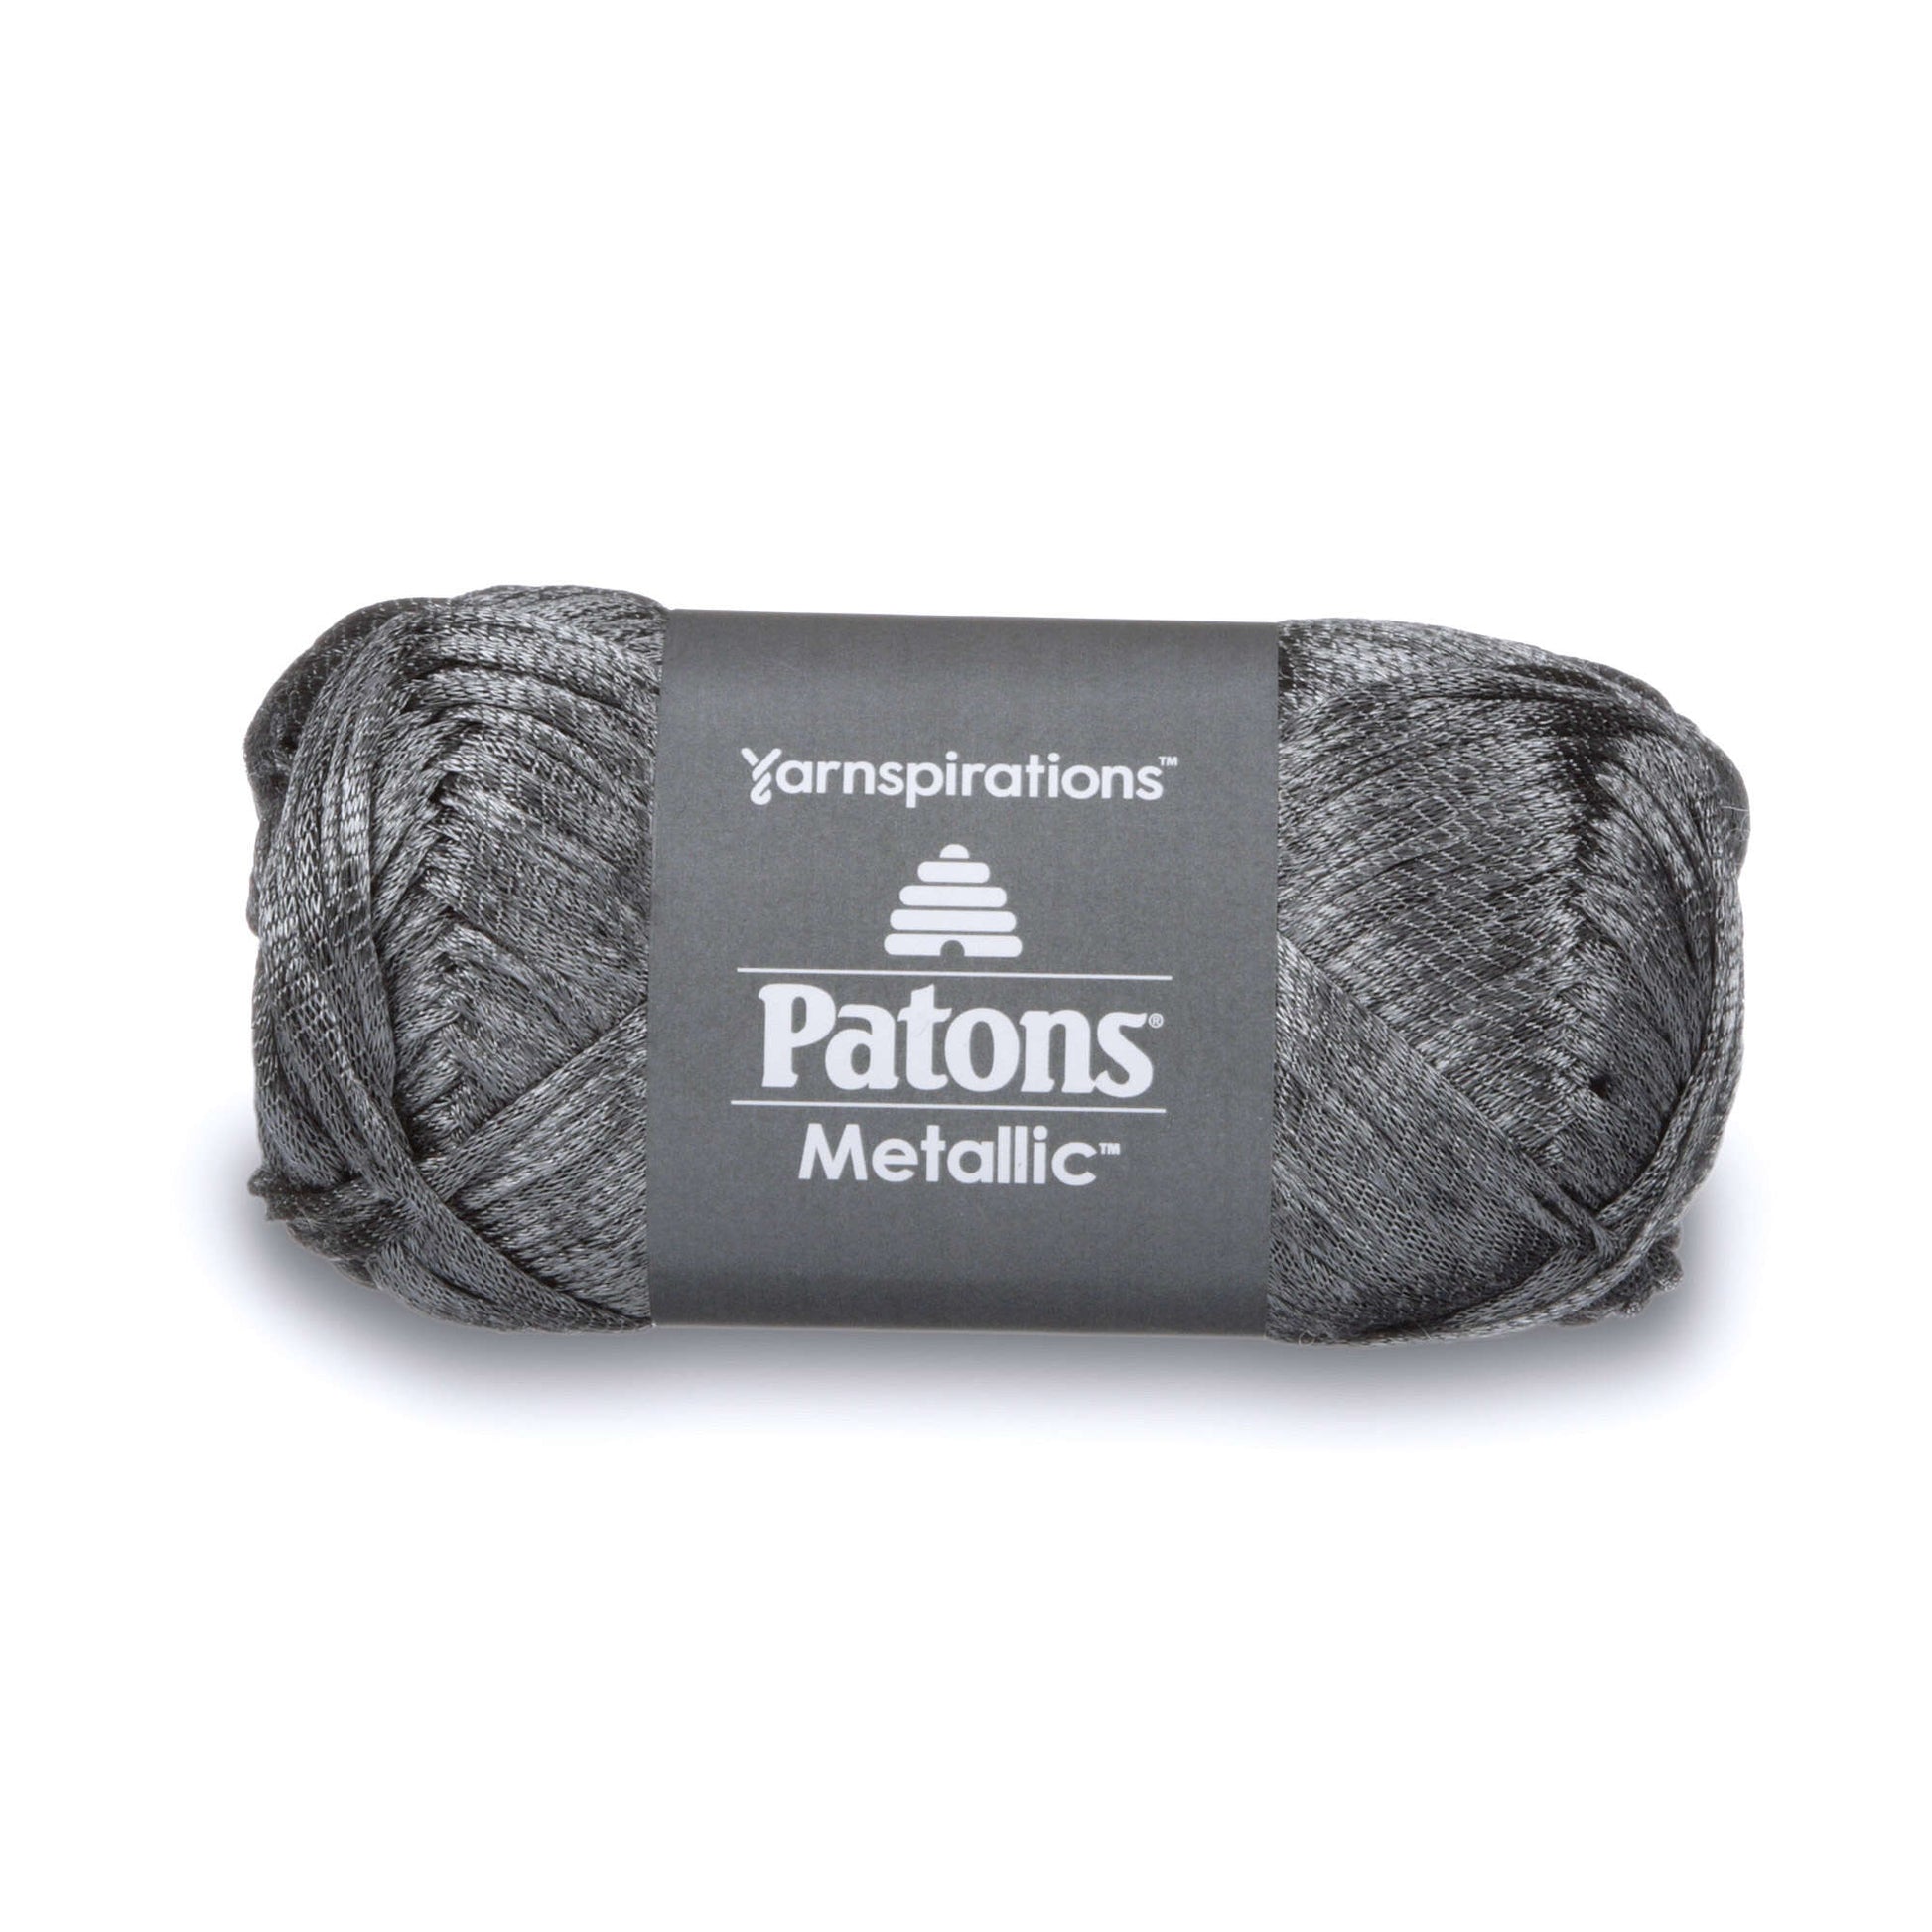 Patons Metallic Yarn - Discontinued Pewter